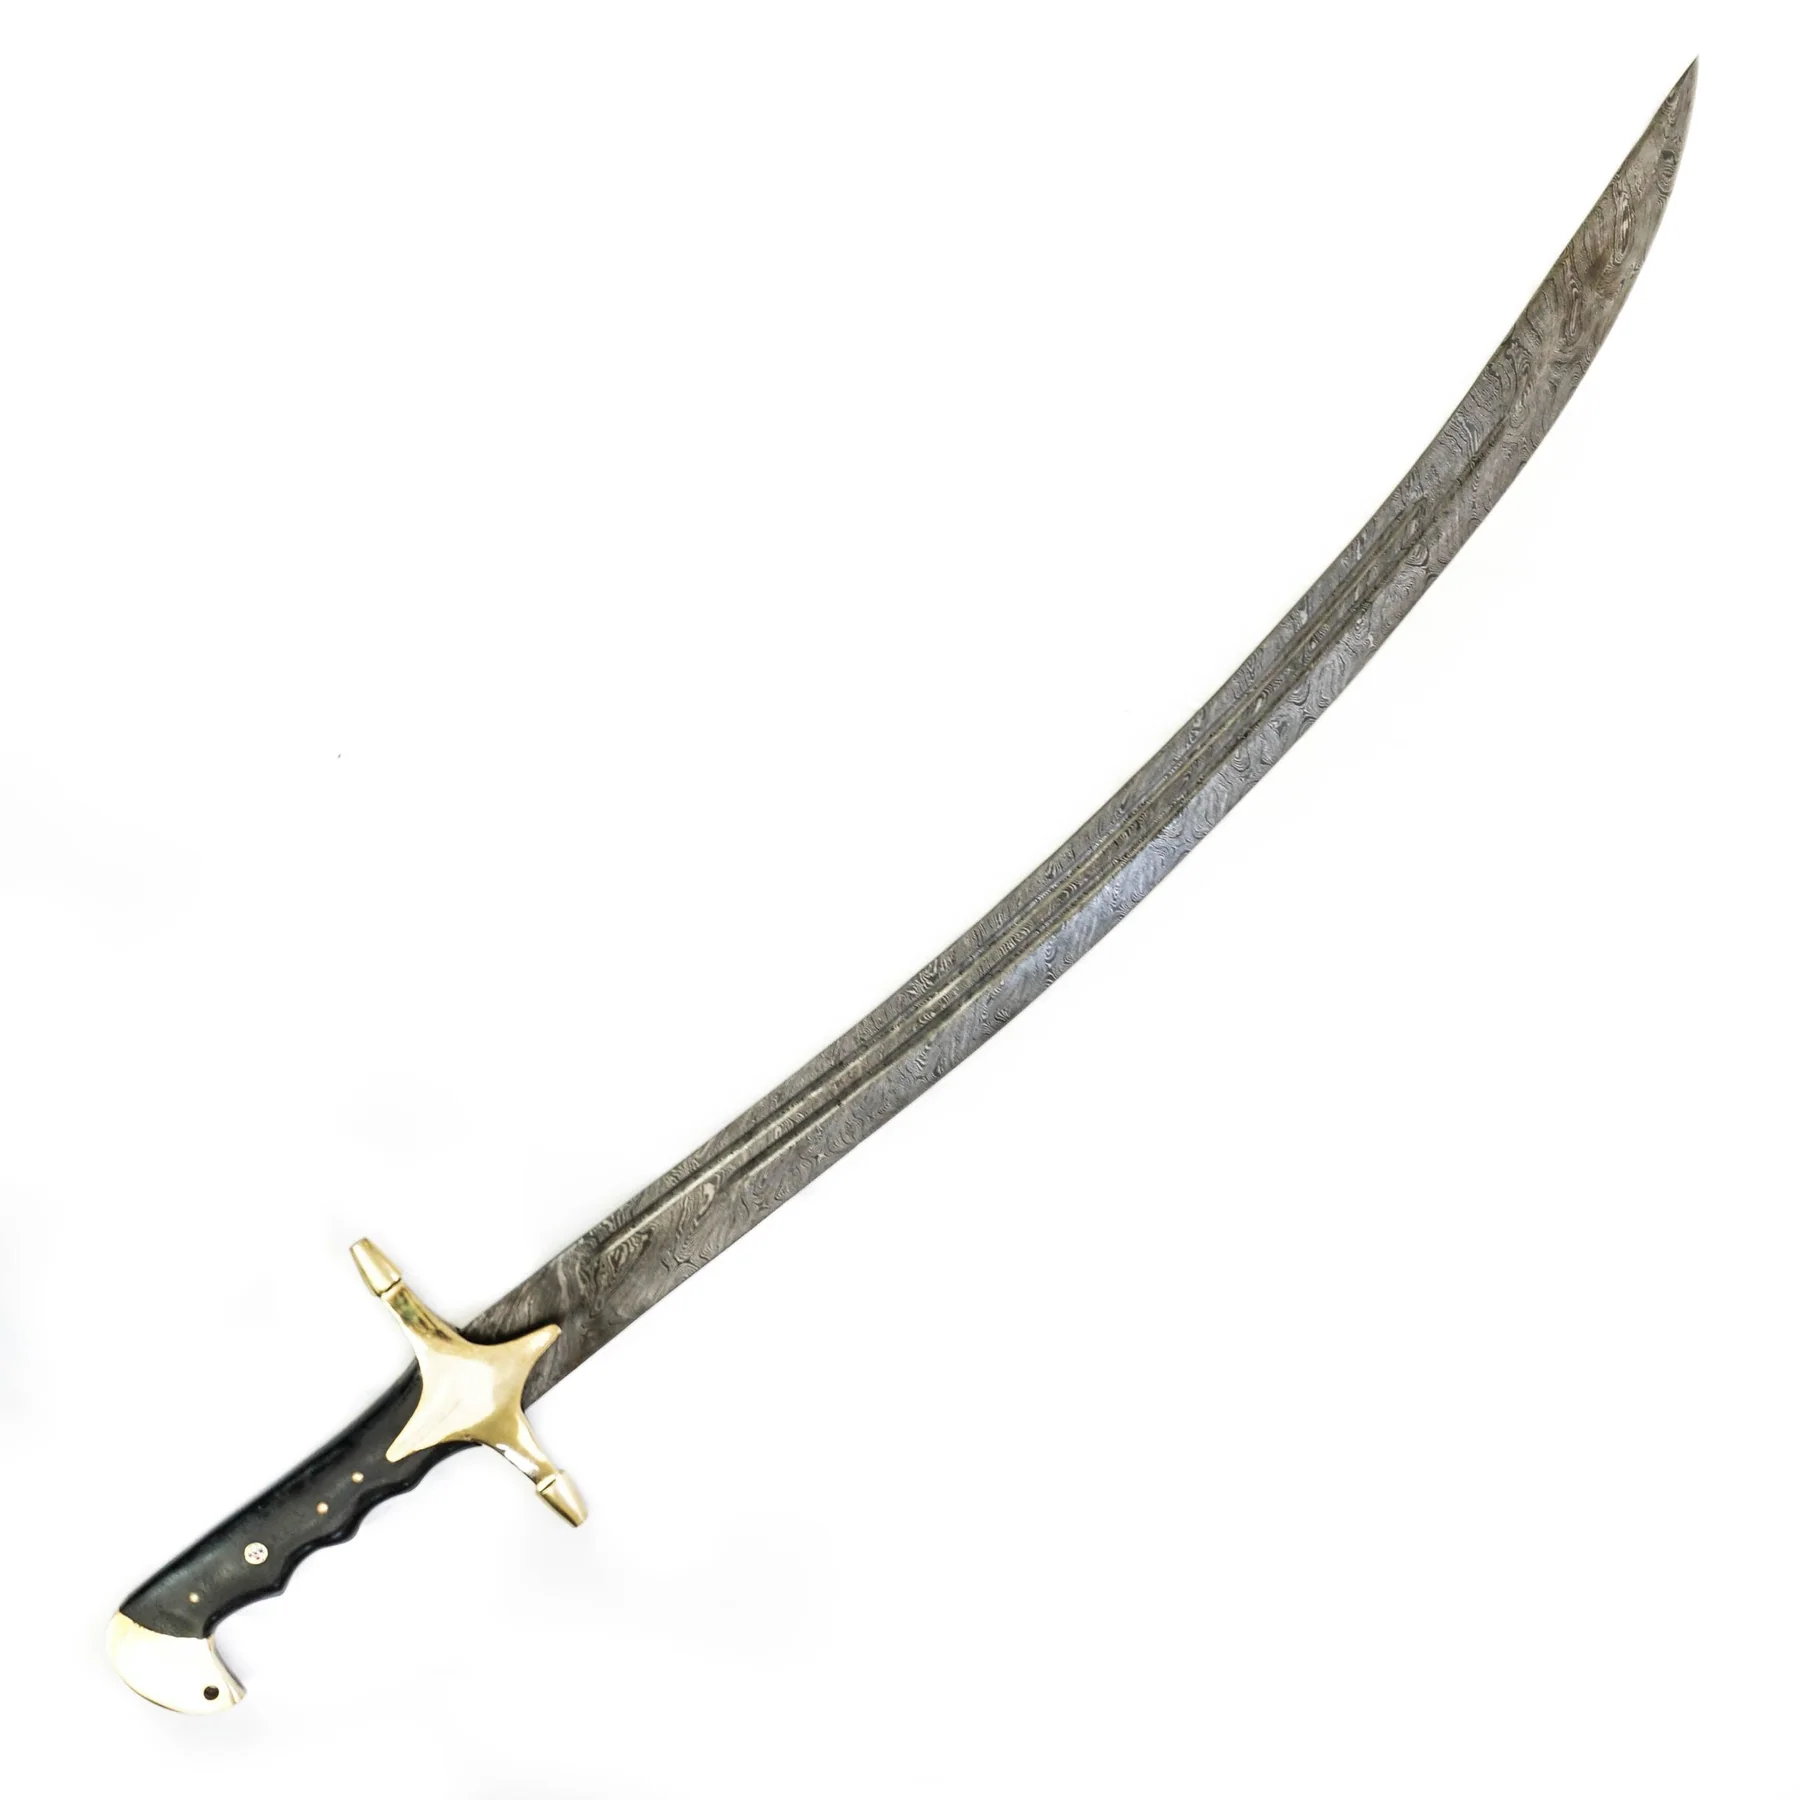 legendary sword names